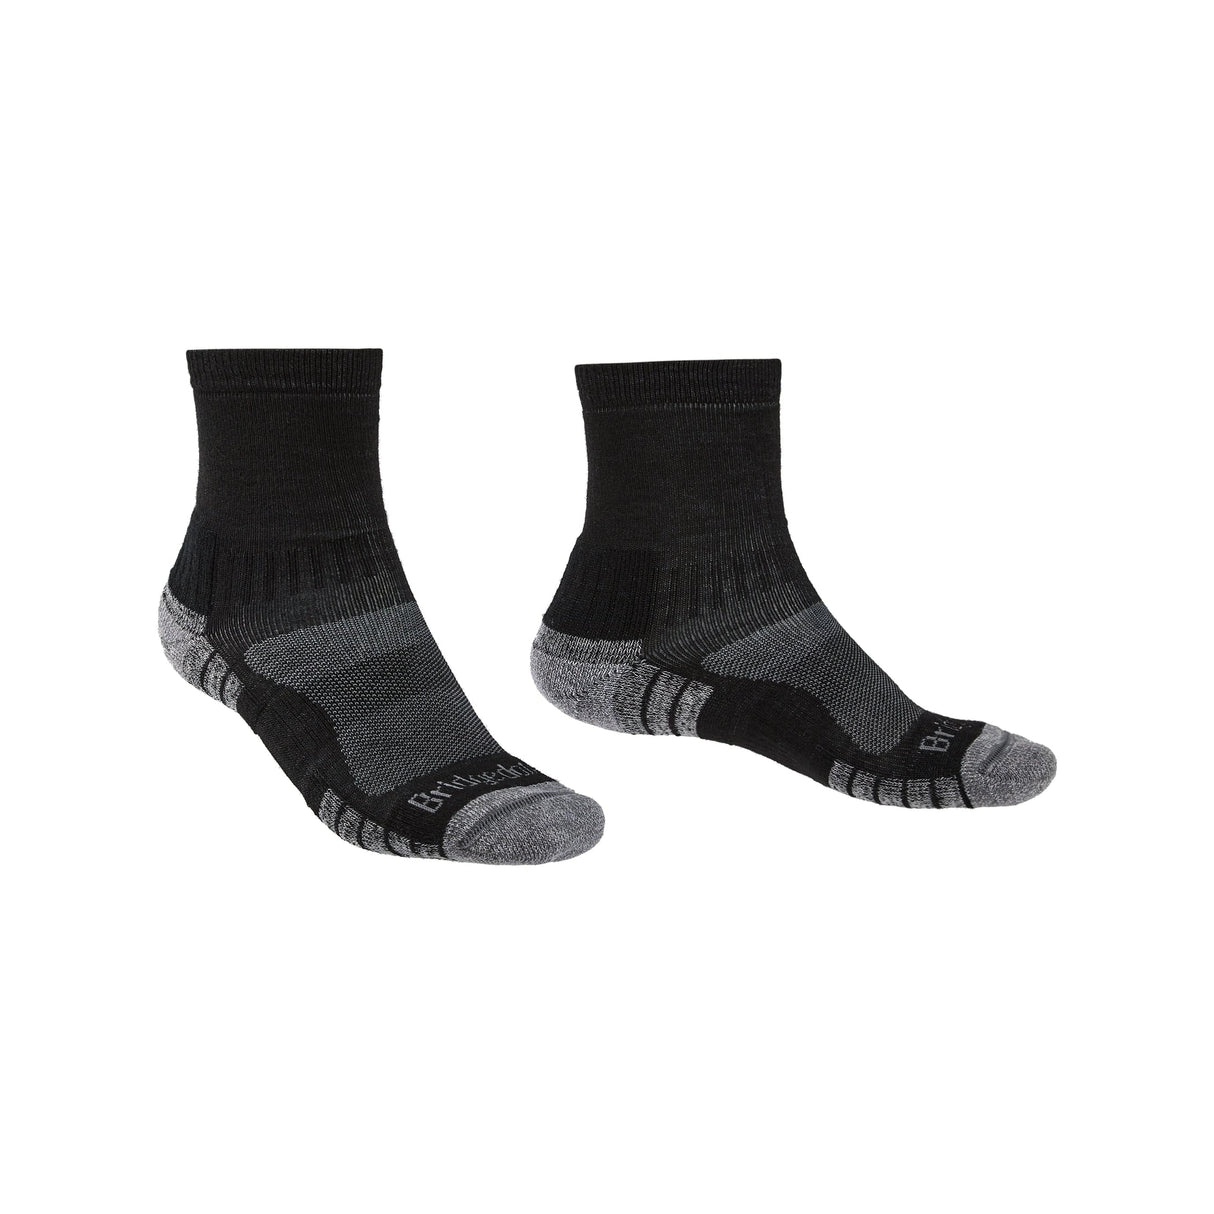 Bridgedale Mens Lightweight Merino Performance 3/4 Crew Socks  -  Medium / Black/Silver